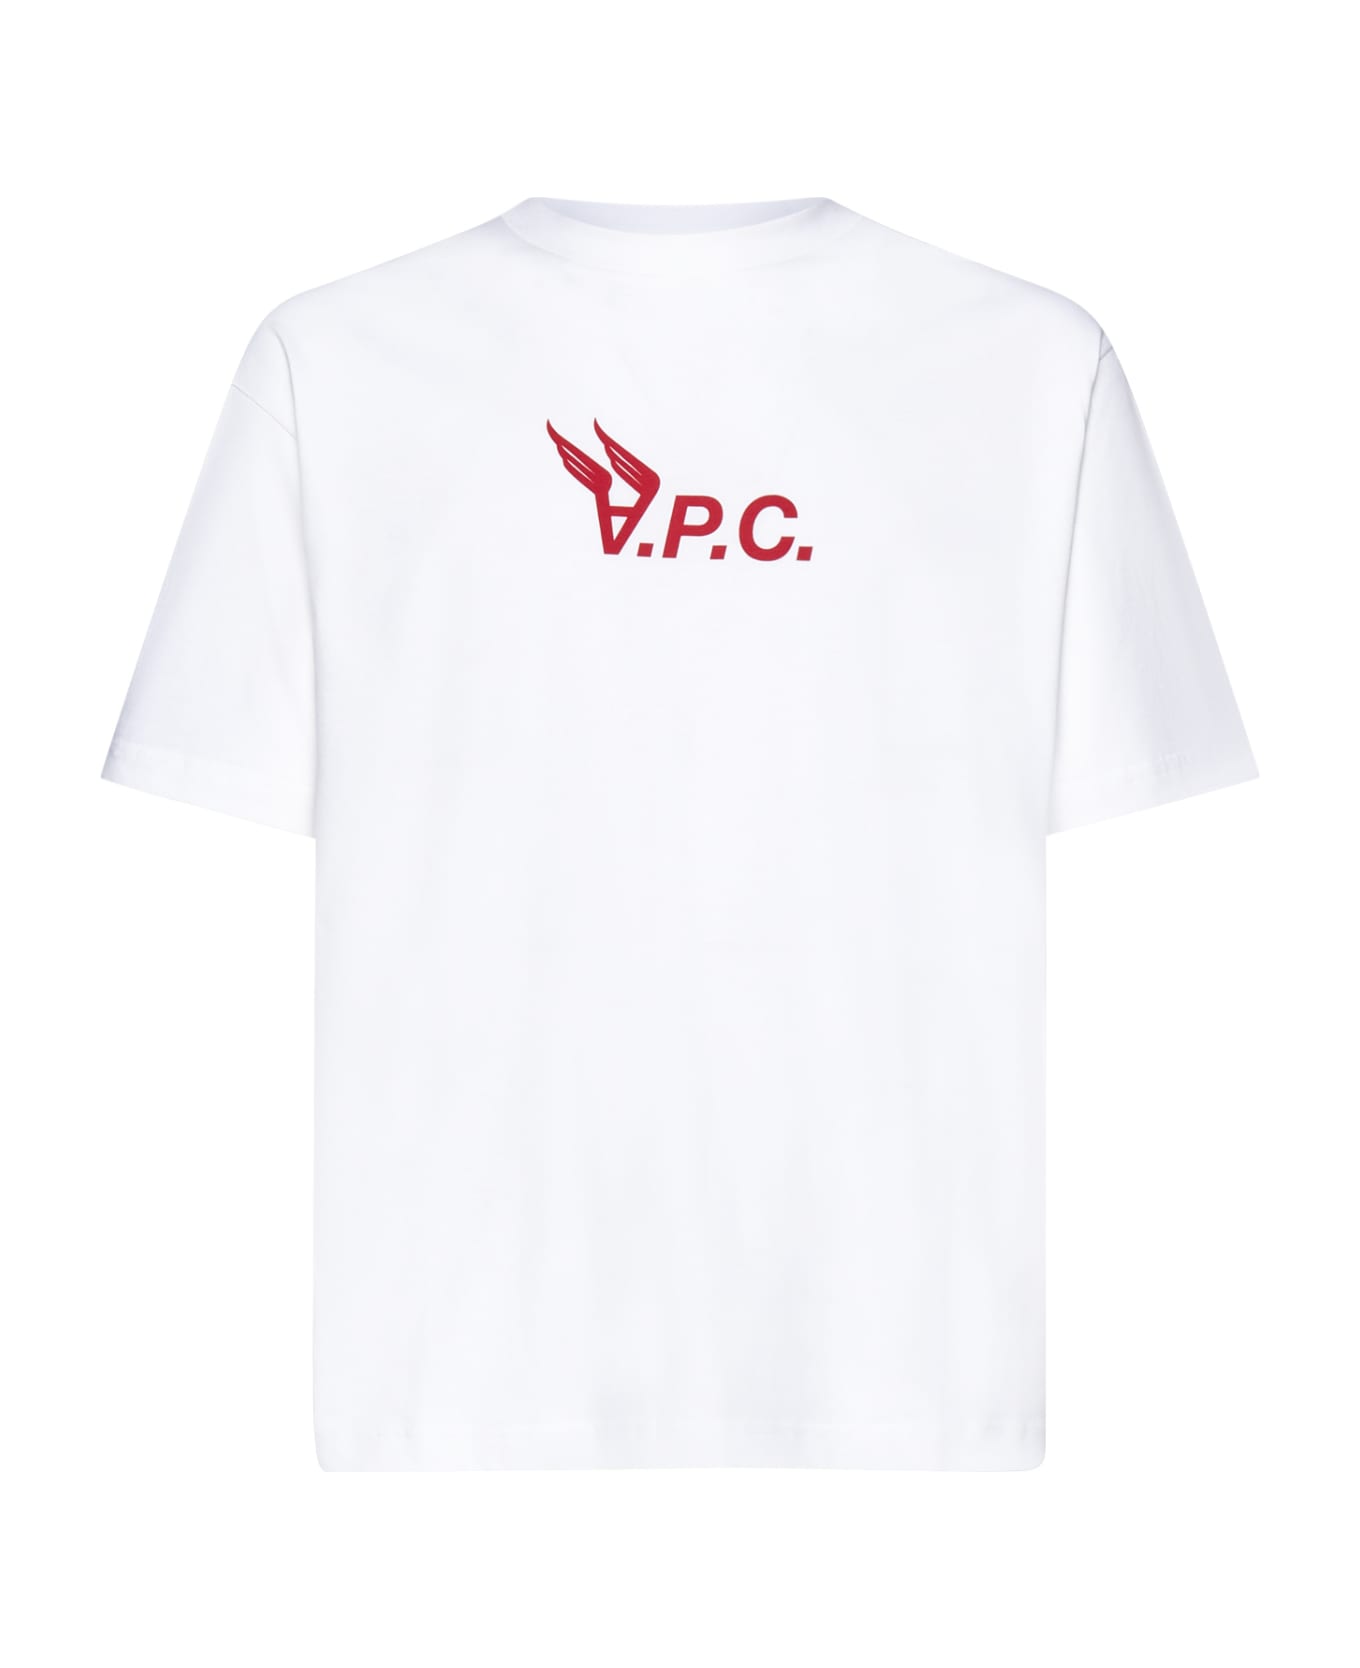 A.P.C. Hermance T-shirt - Cream シャツ